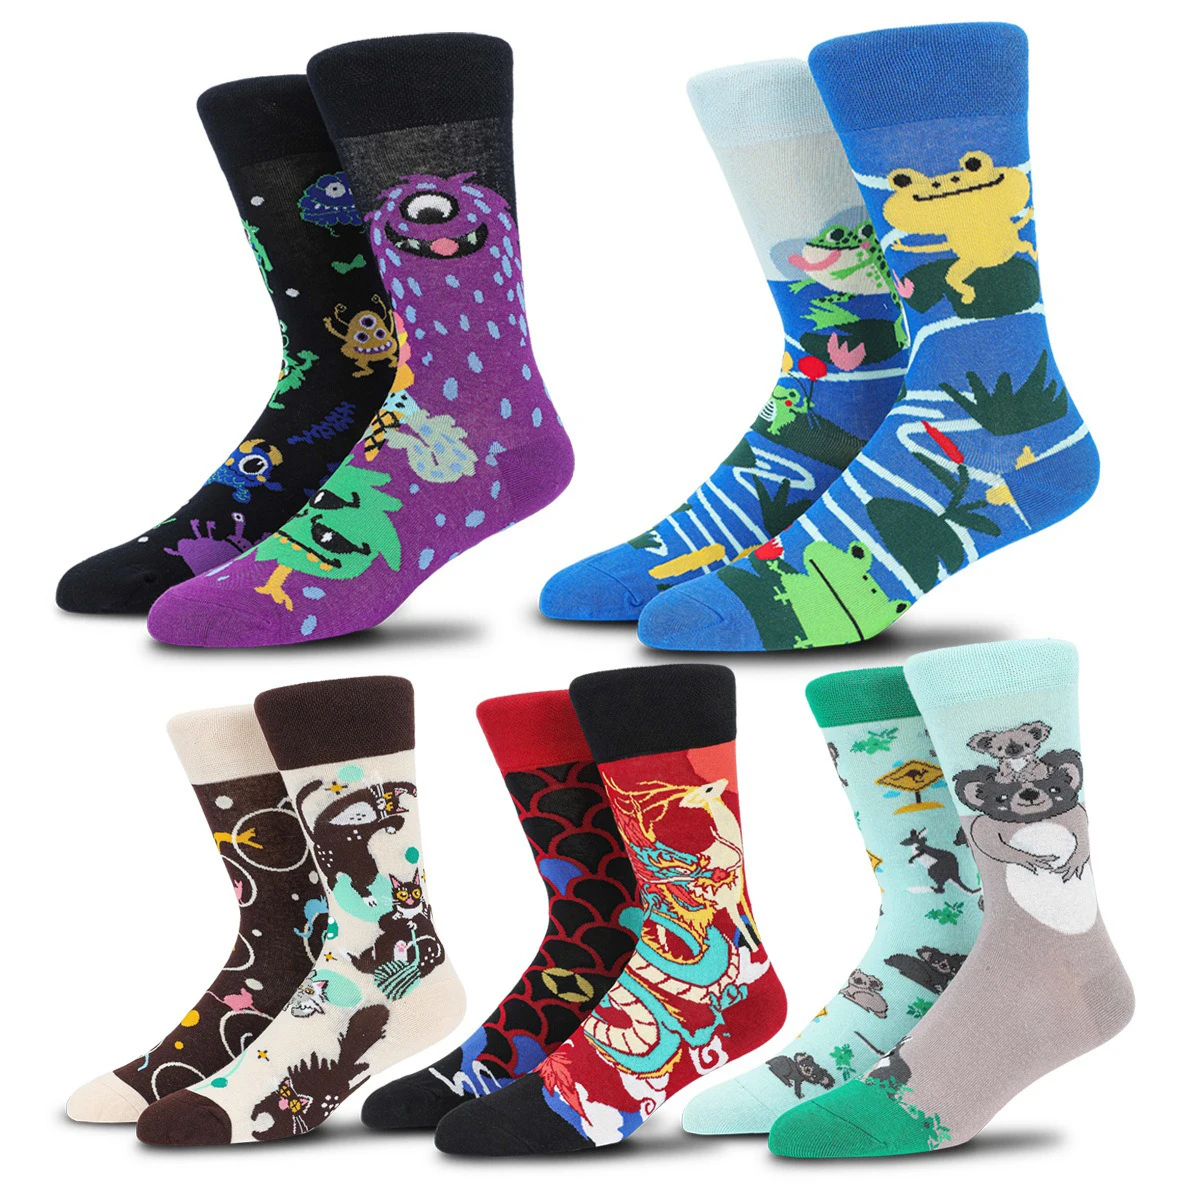 

Fun Mens dress Socks Colorful Crazy Cool Funny Socks Animal AB Edition Patterned Funky Novelty Socks Size 7-11.5